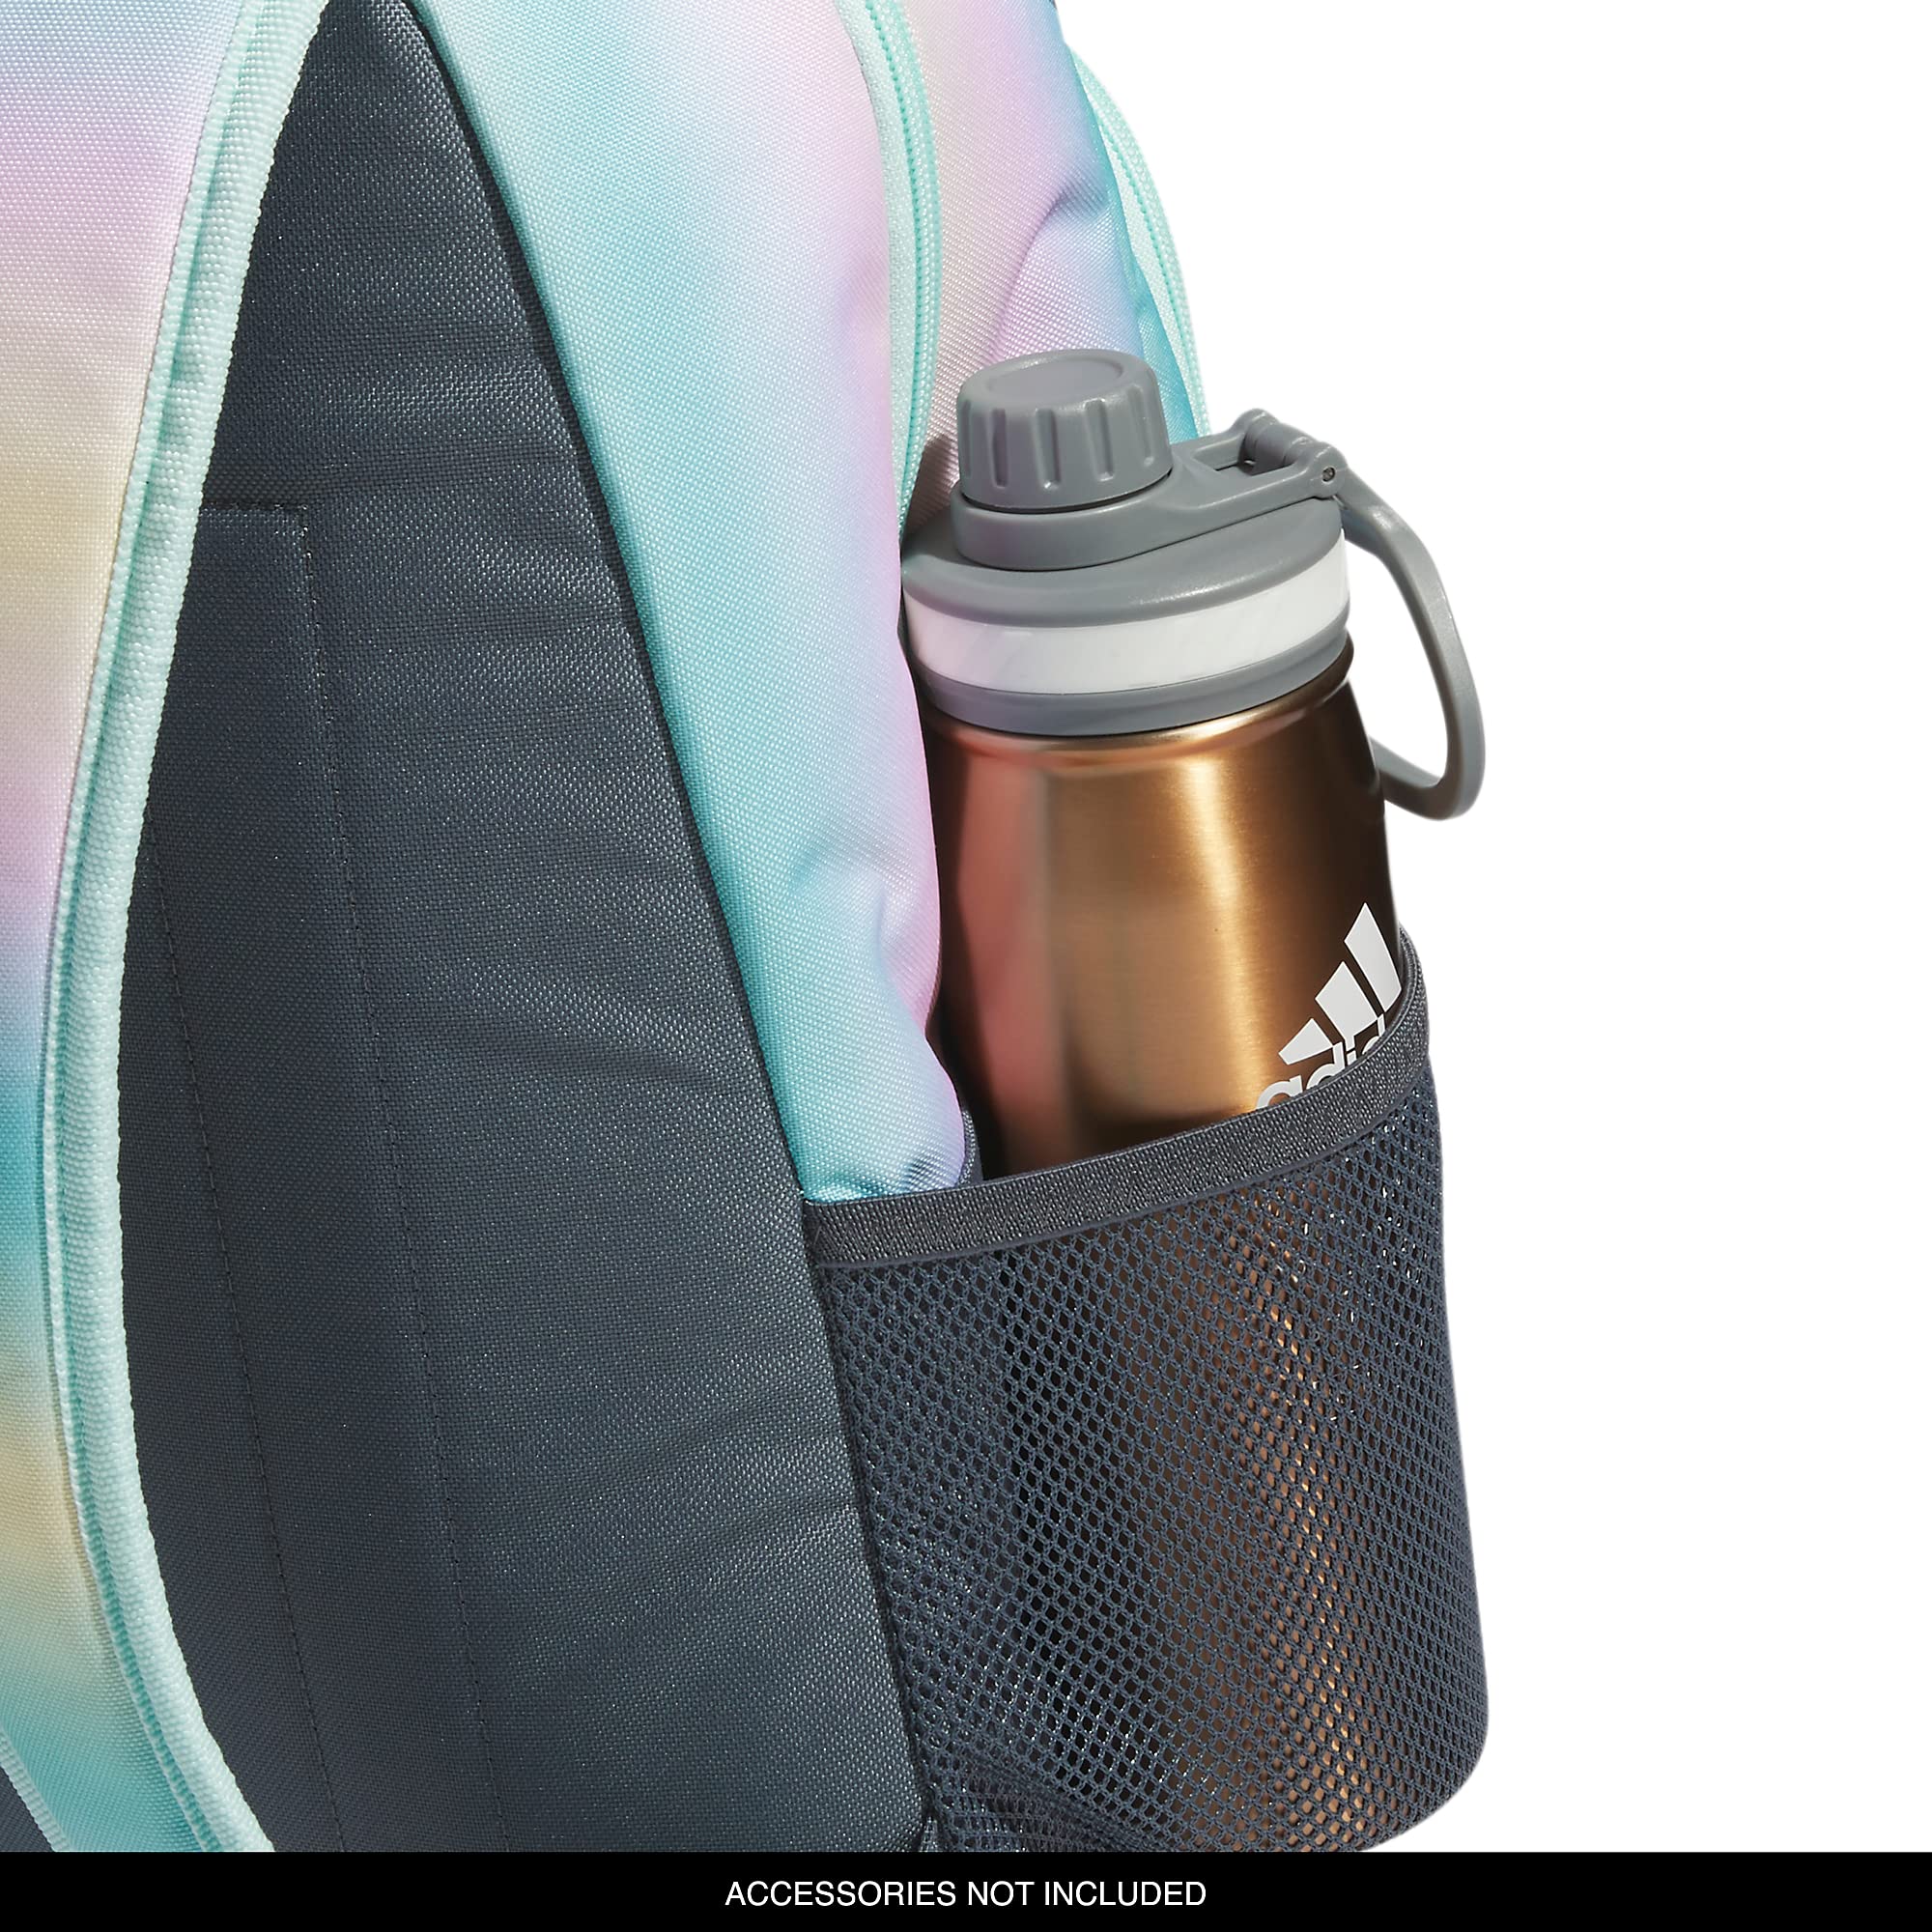 adidas Creator 2 Backpack, Gradient Flash Aqua/Onix Grey/White, One Size